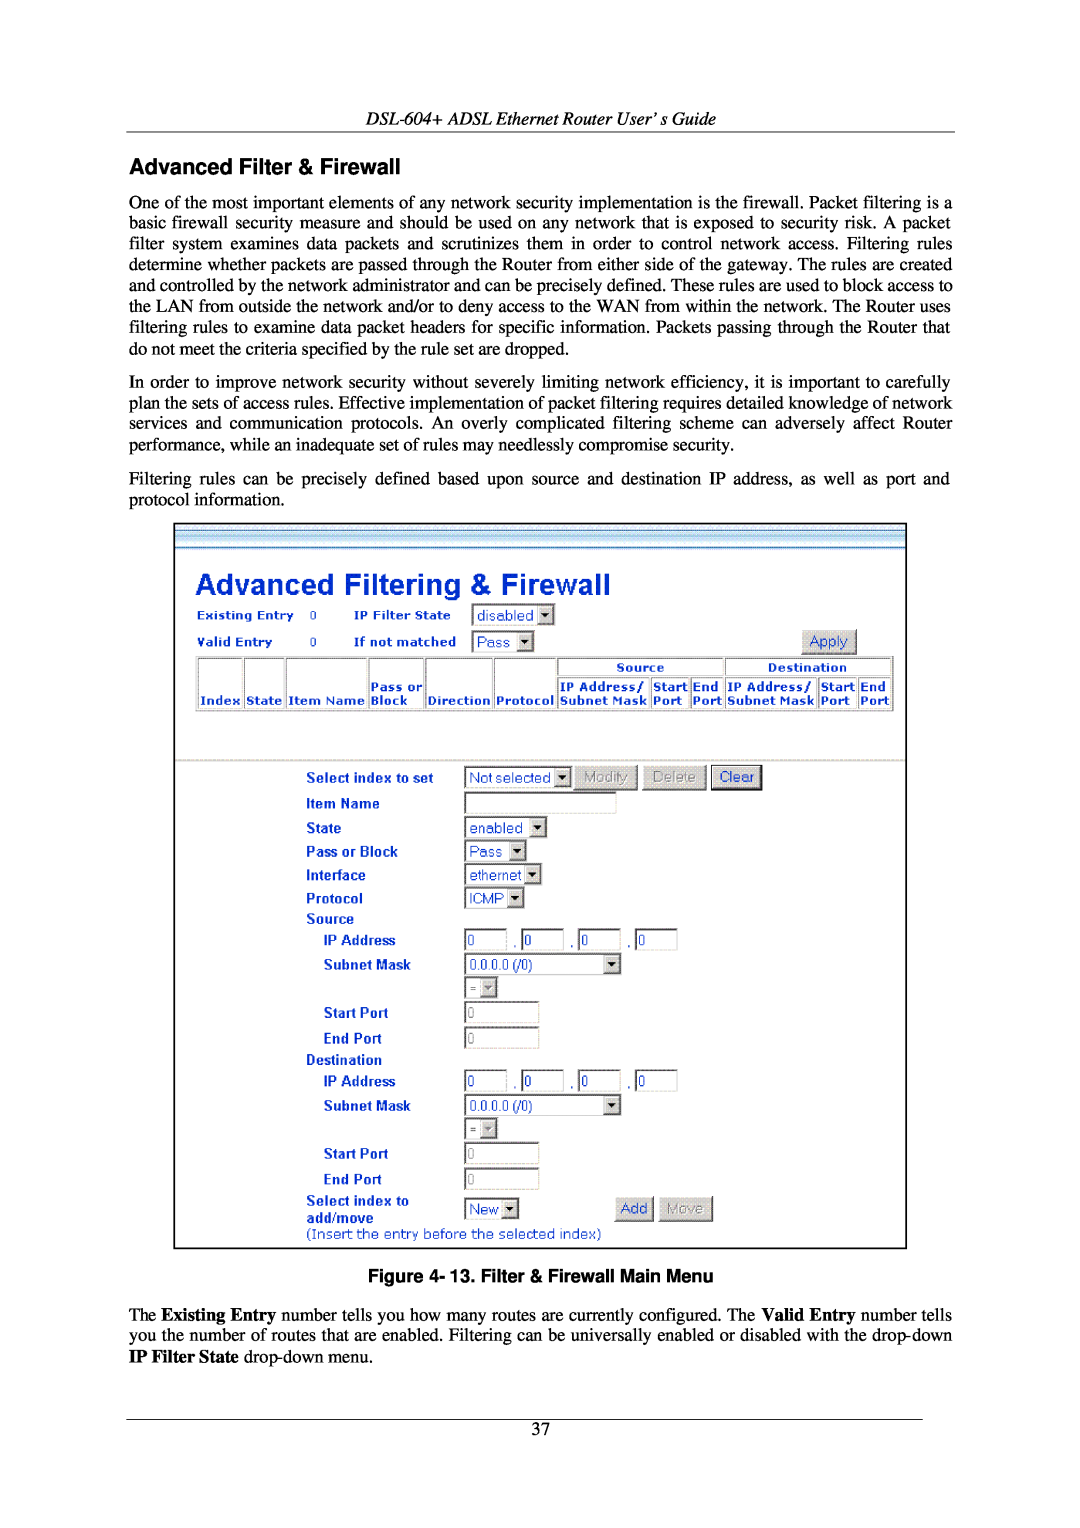 D-Link manual Advanced Filter & Firewall, DSL-604+ ADSL Ethernet Router User’s Guide, 13. Filter & Firewall Main Menu 